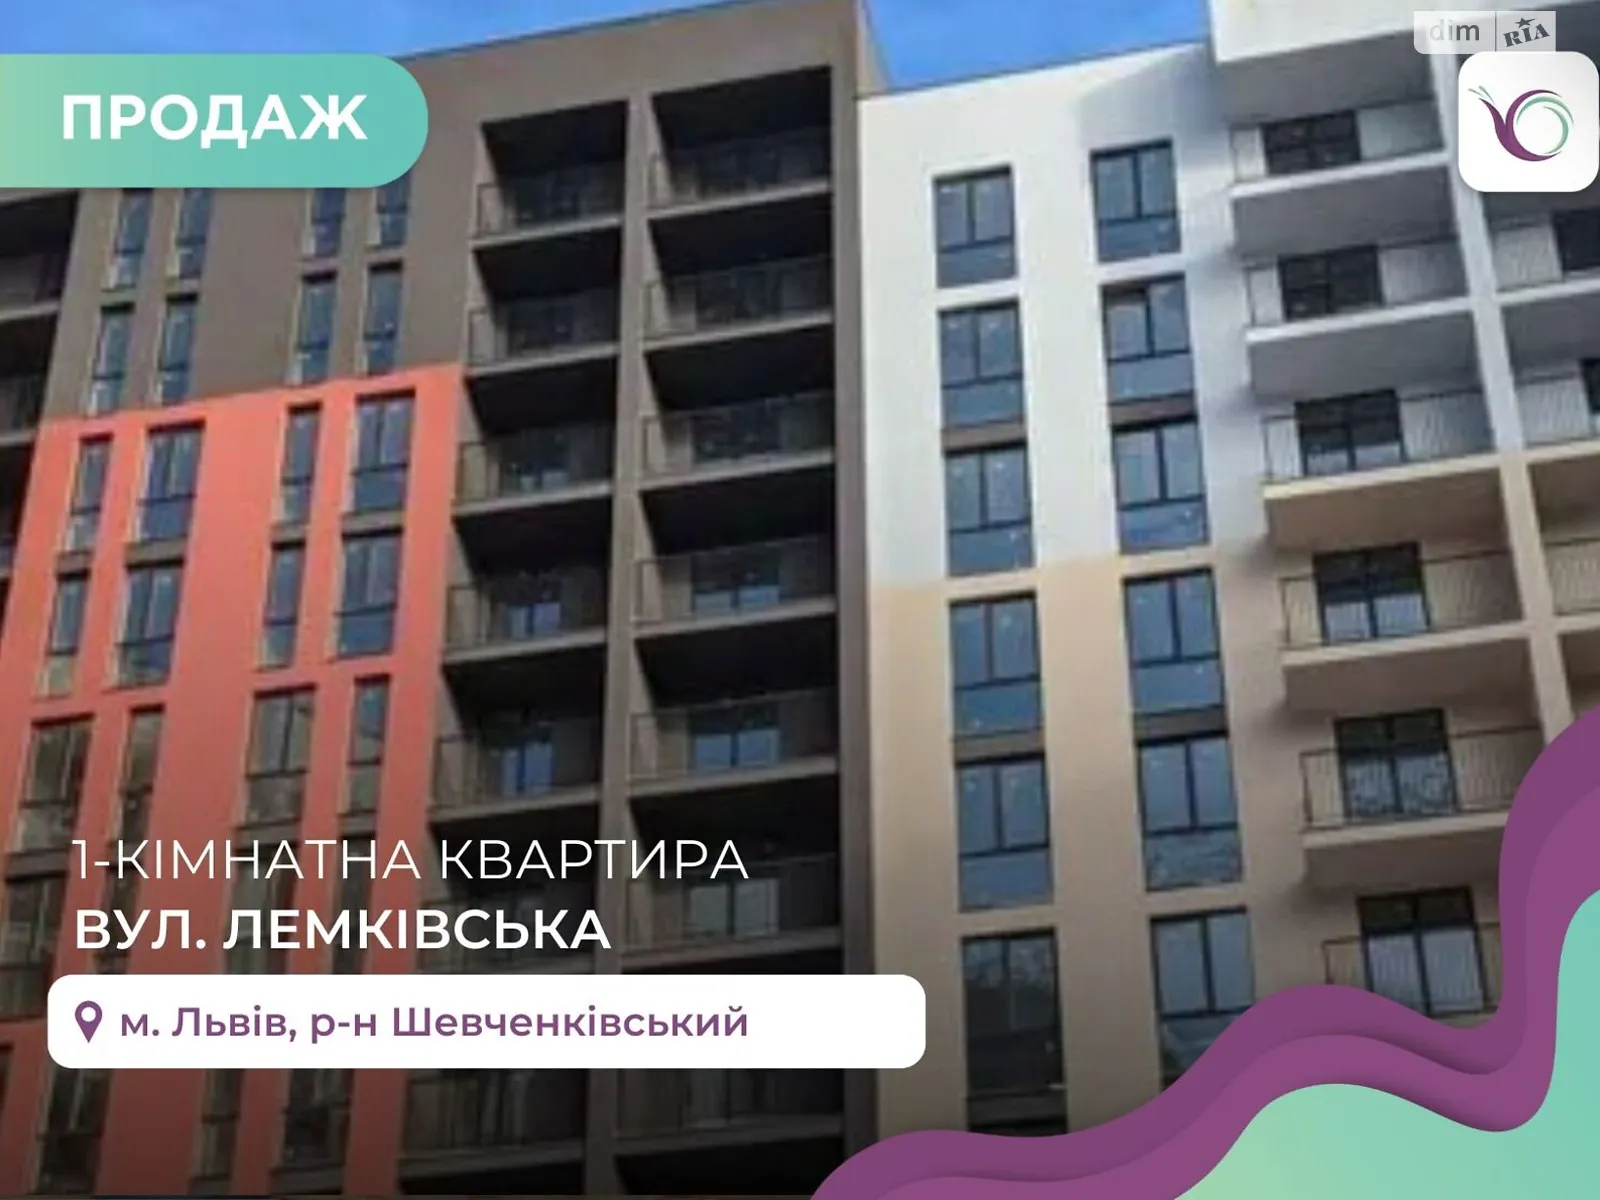 Продается 1-комнатная квартира 27.85 кв. м в Львове, цена: 58764 $ - фото 1